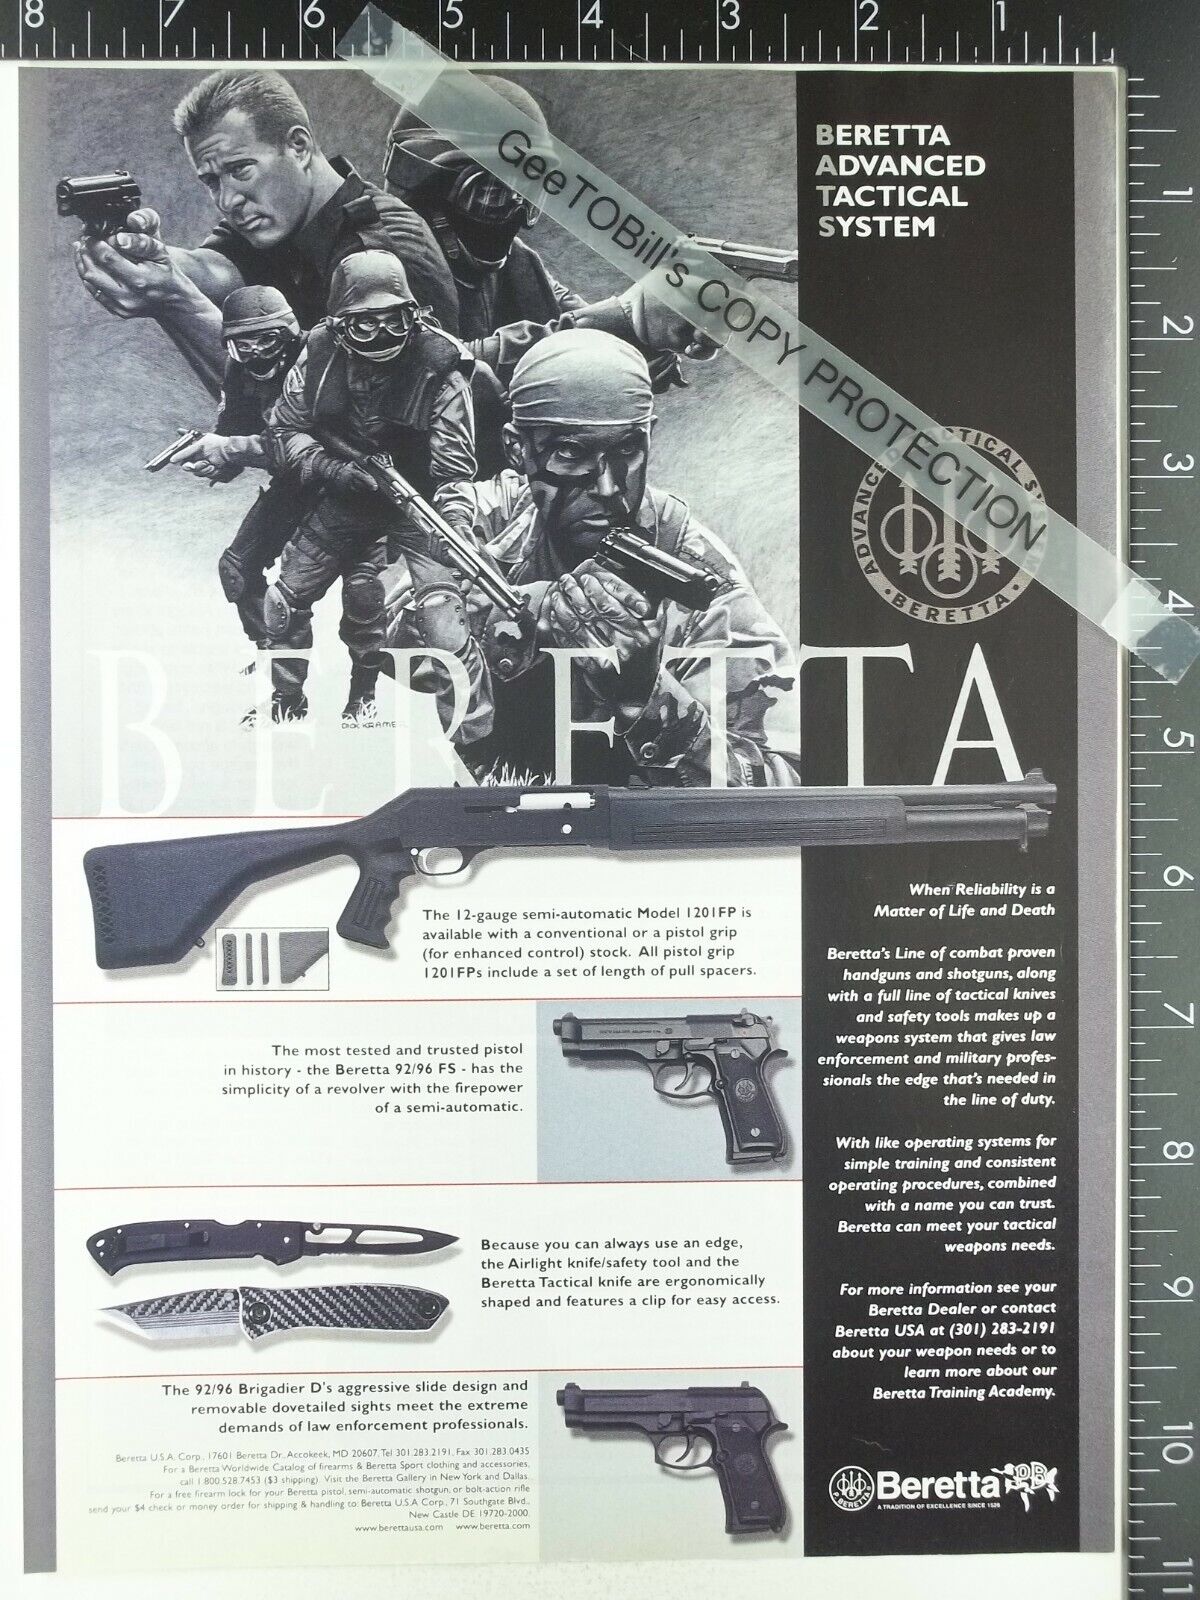 2000 ADVERTISING AD for Beretta 1210FP tactical shotgun 92 96 Brigadier D pistol